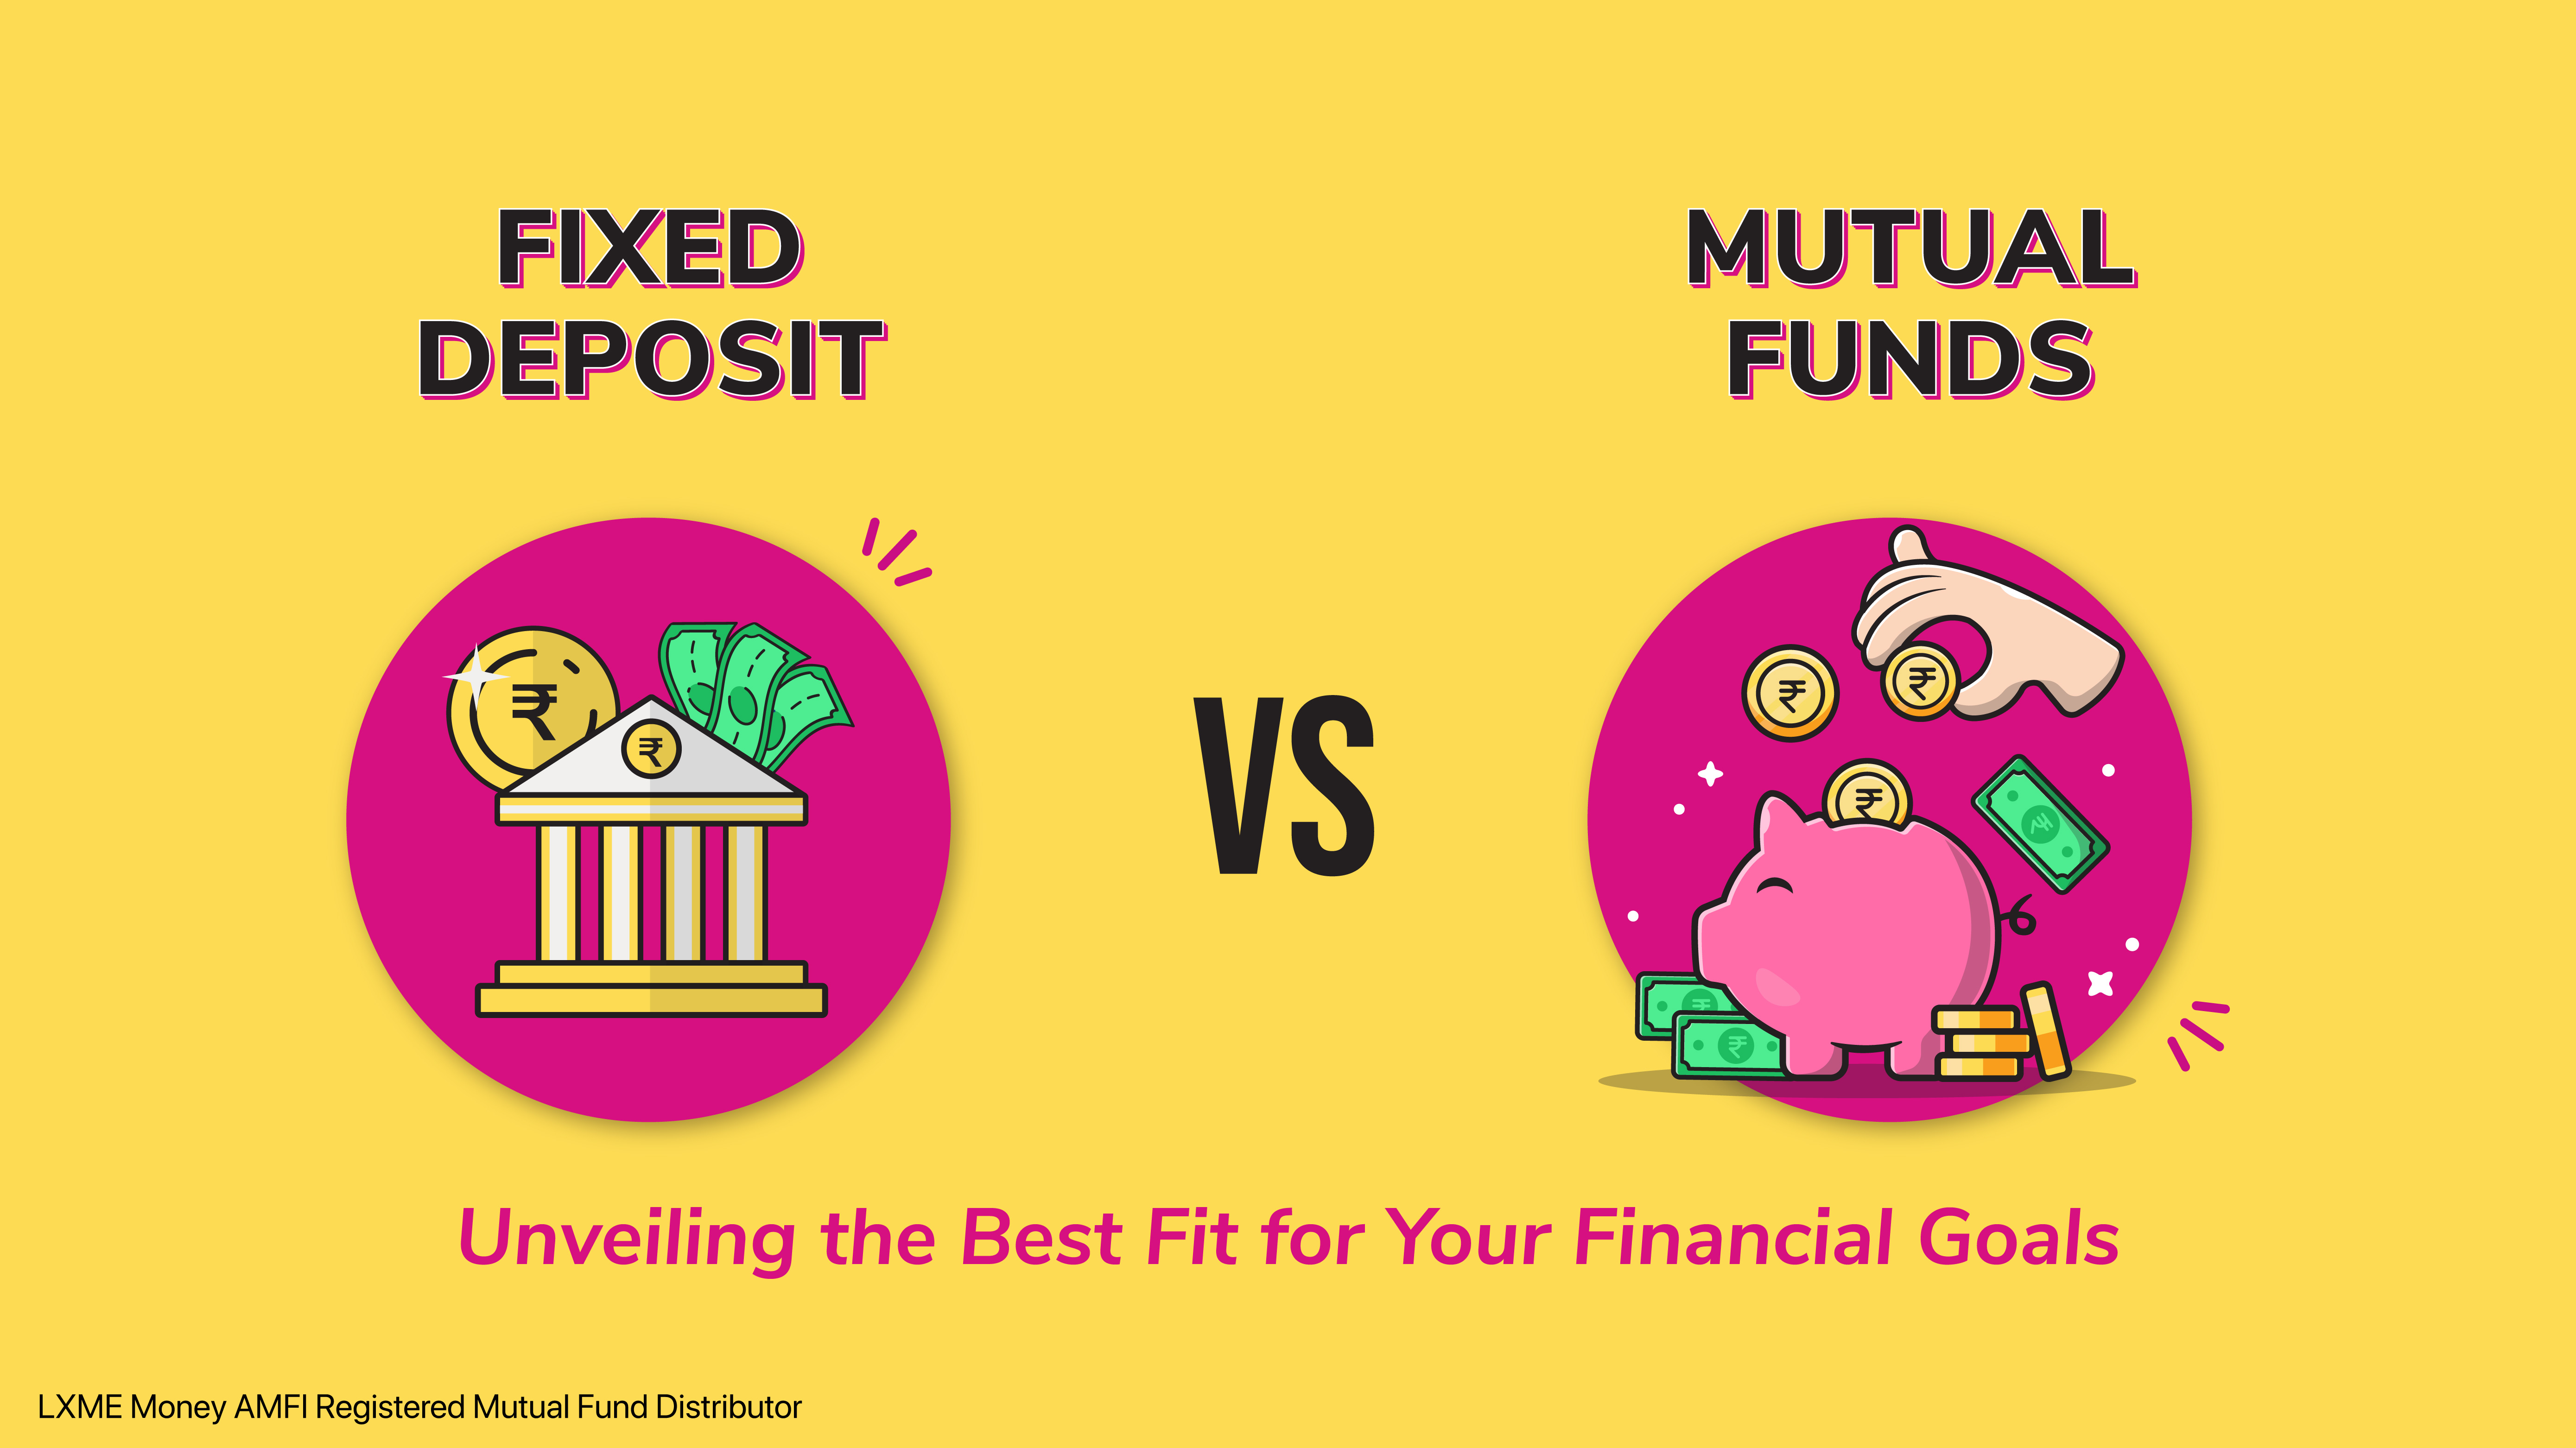 Fixed deposit vs Mutual funds